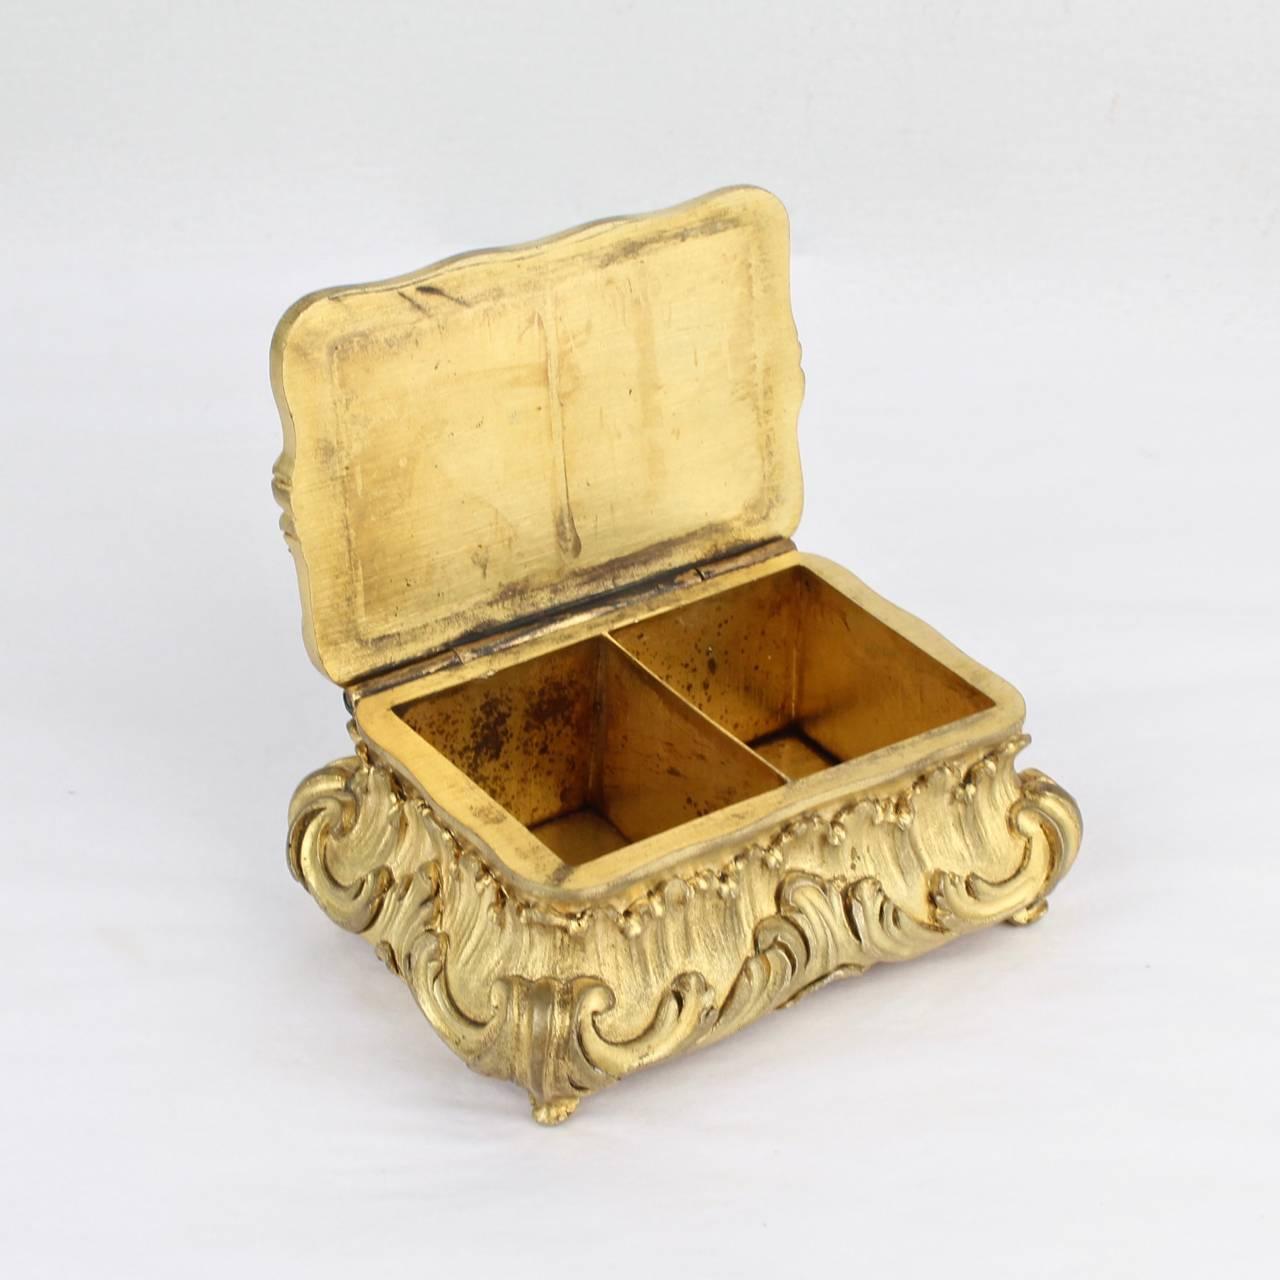 Antique Small Doré Gilt Bronze Table Box or Casket, 19th Century 2